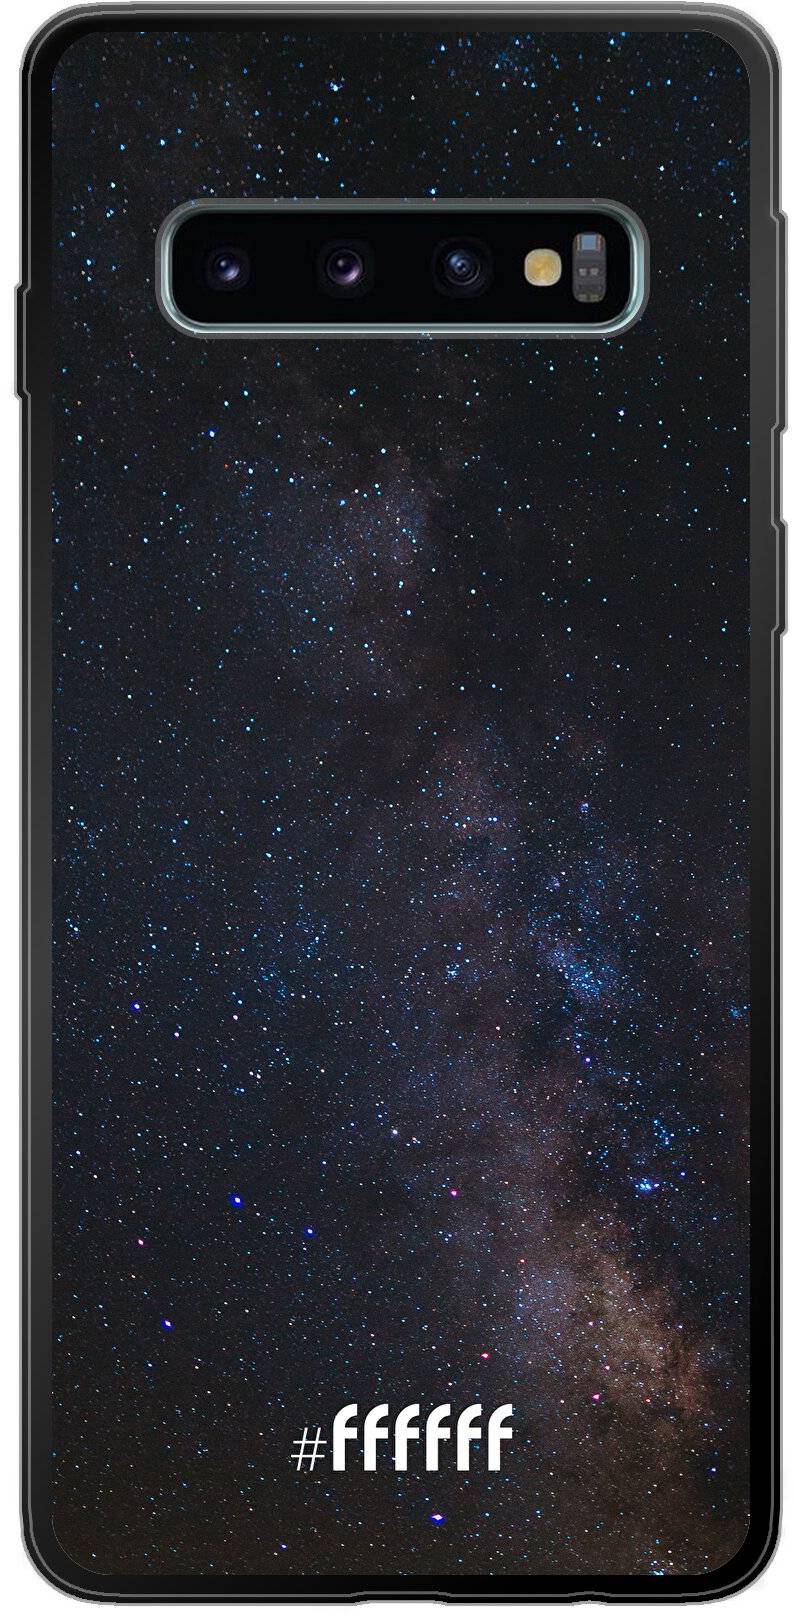 Dark Space Galaxy S10